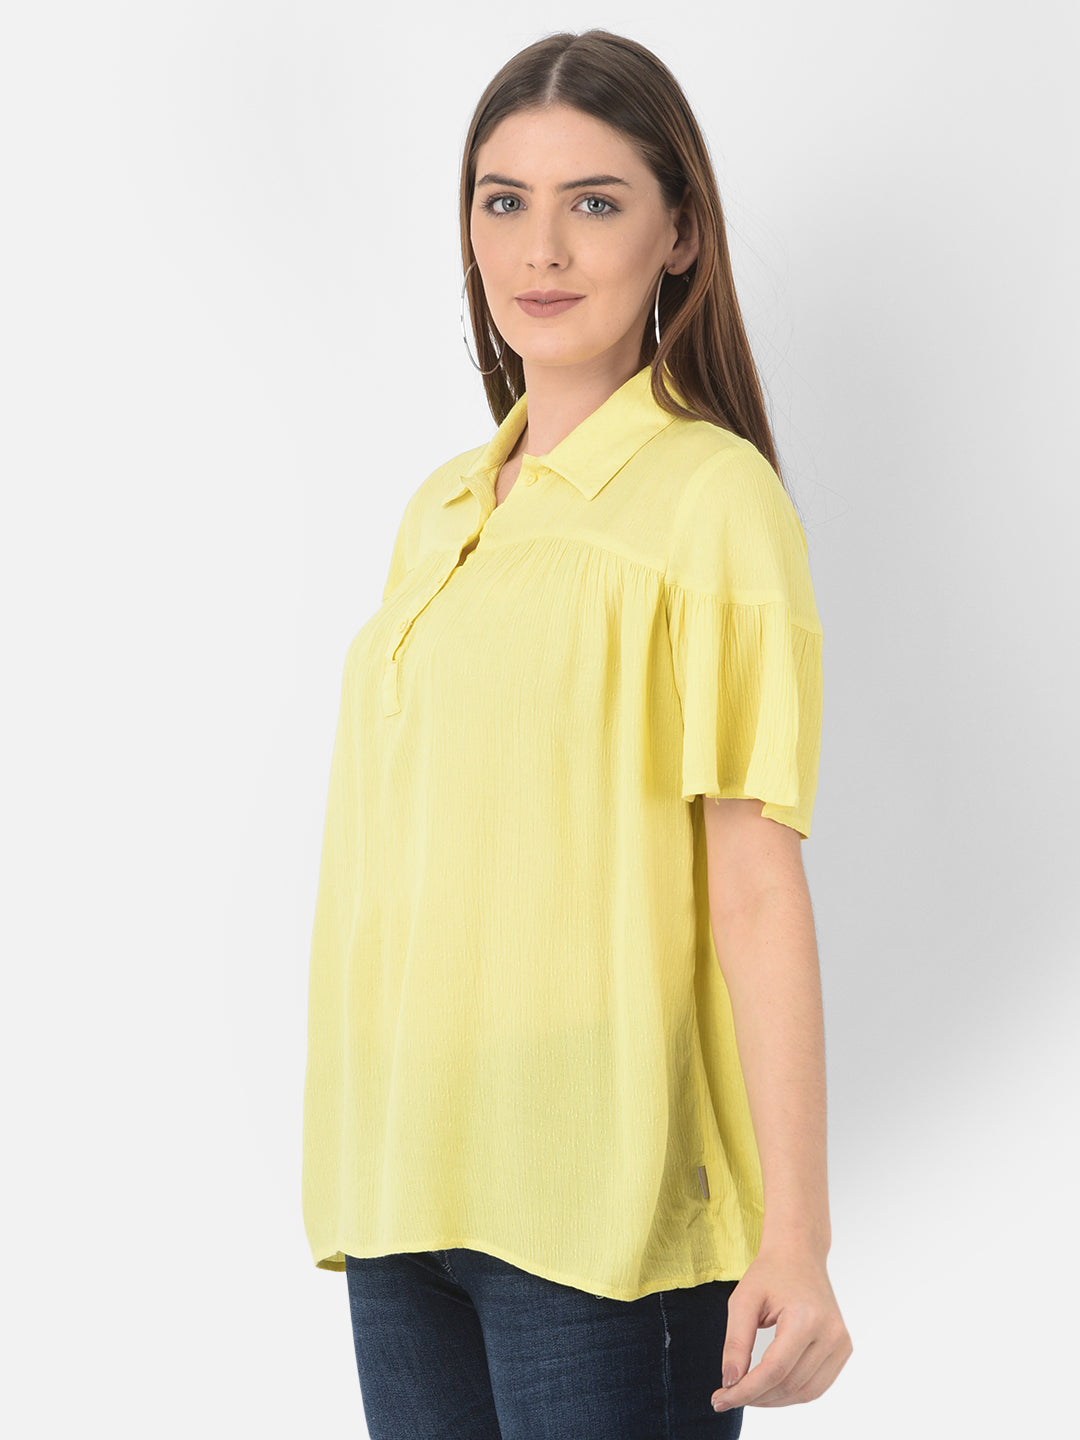 Yellow Spread Collar Top - Women Tops